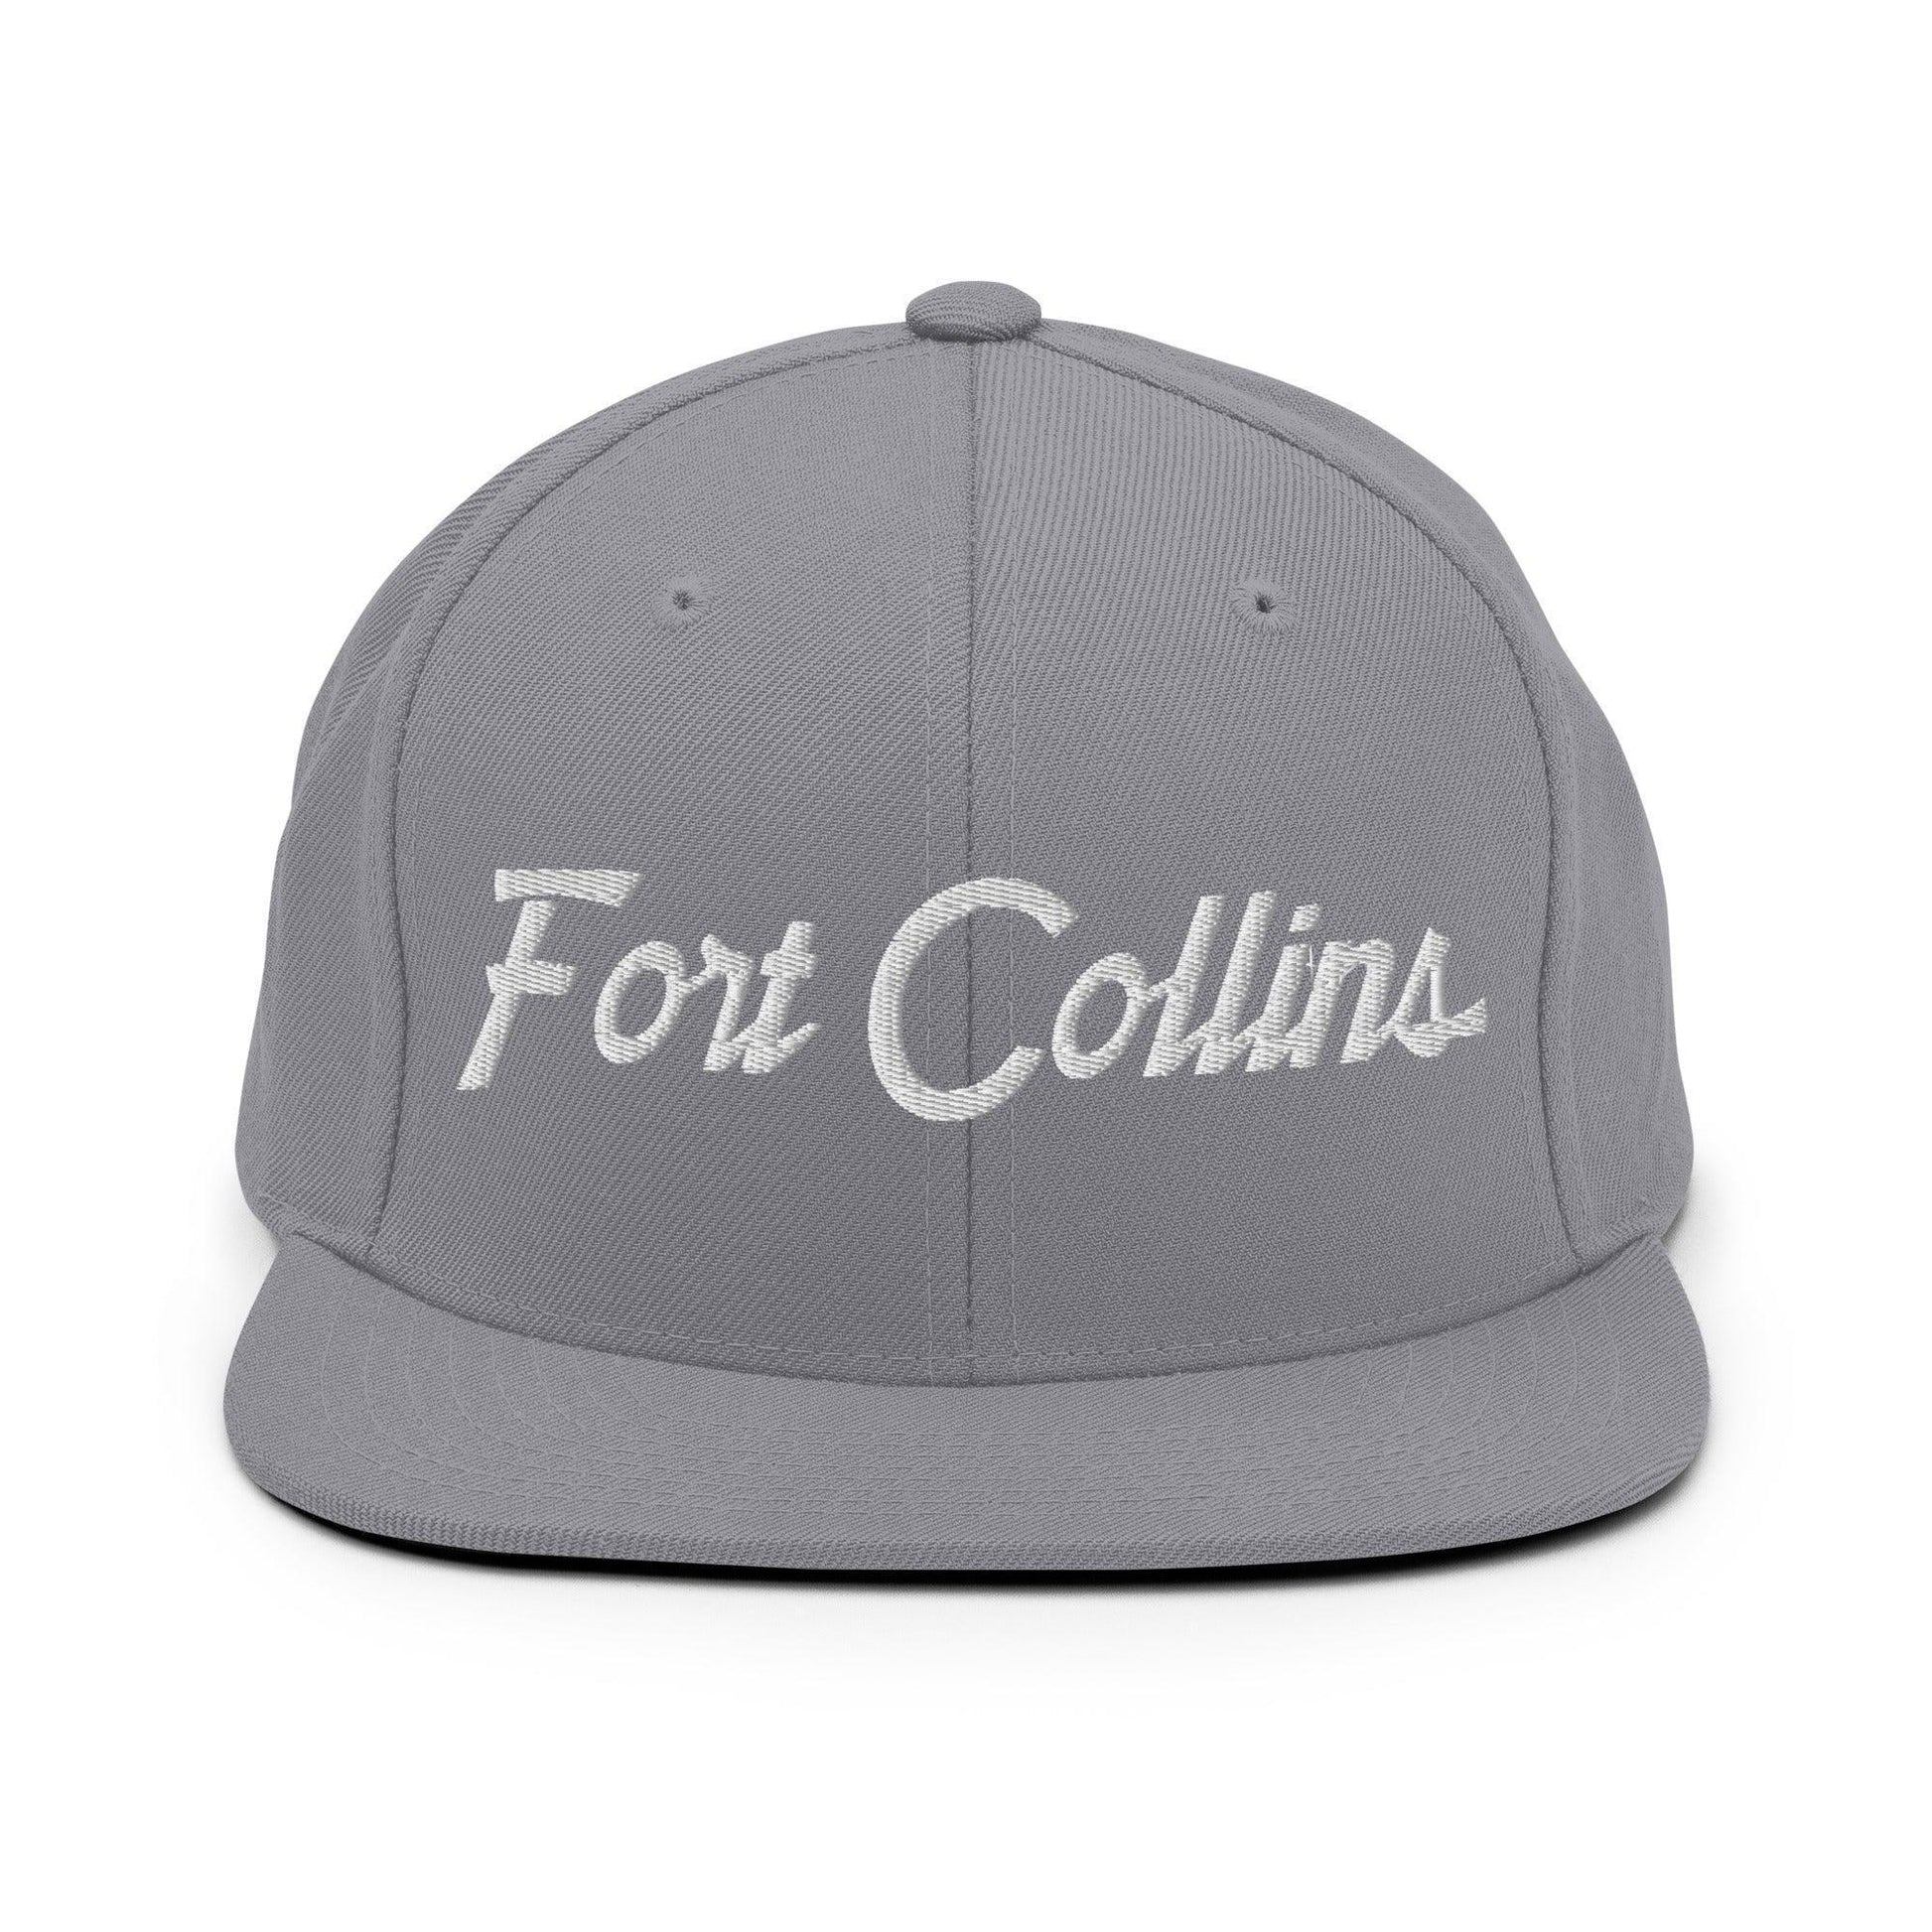 Fort Collins Script Snapback Hat Silver